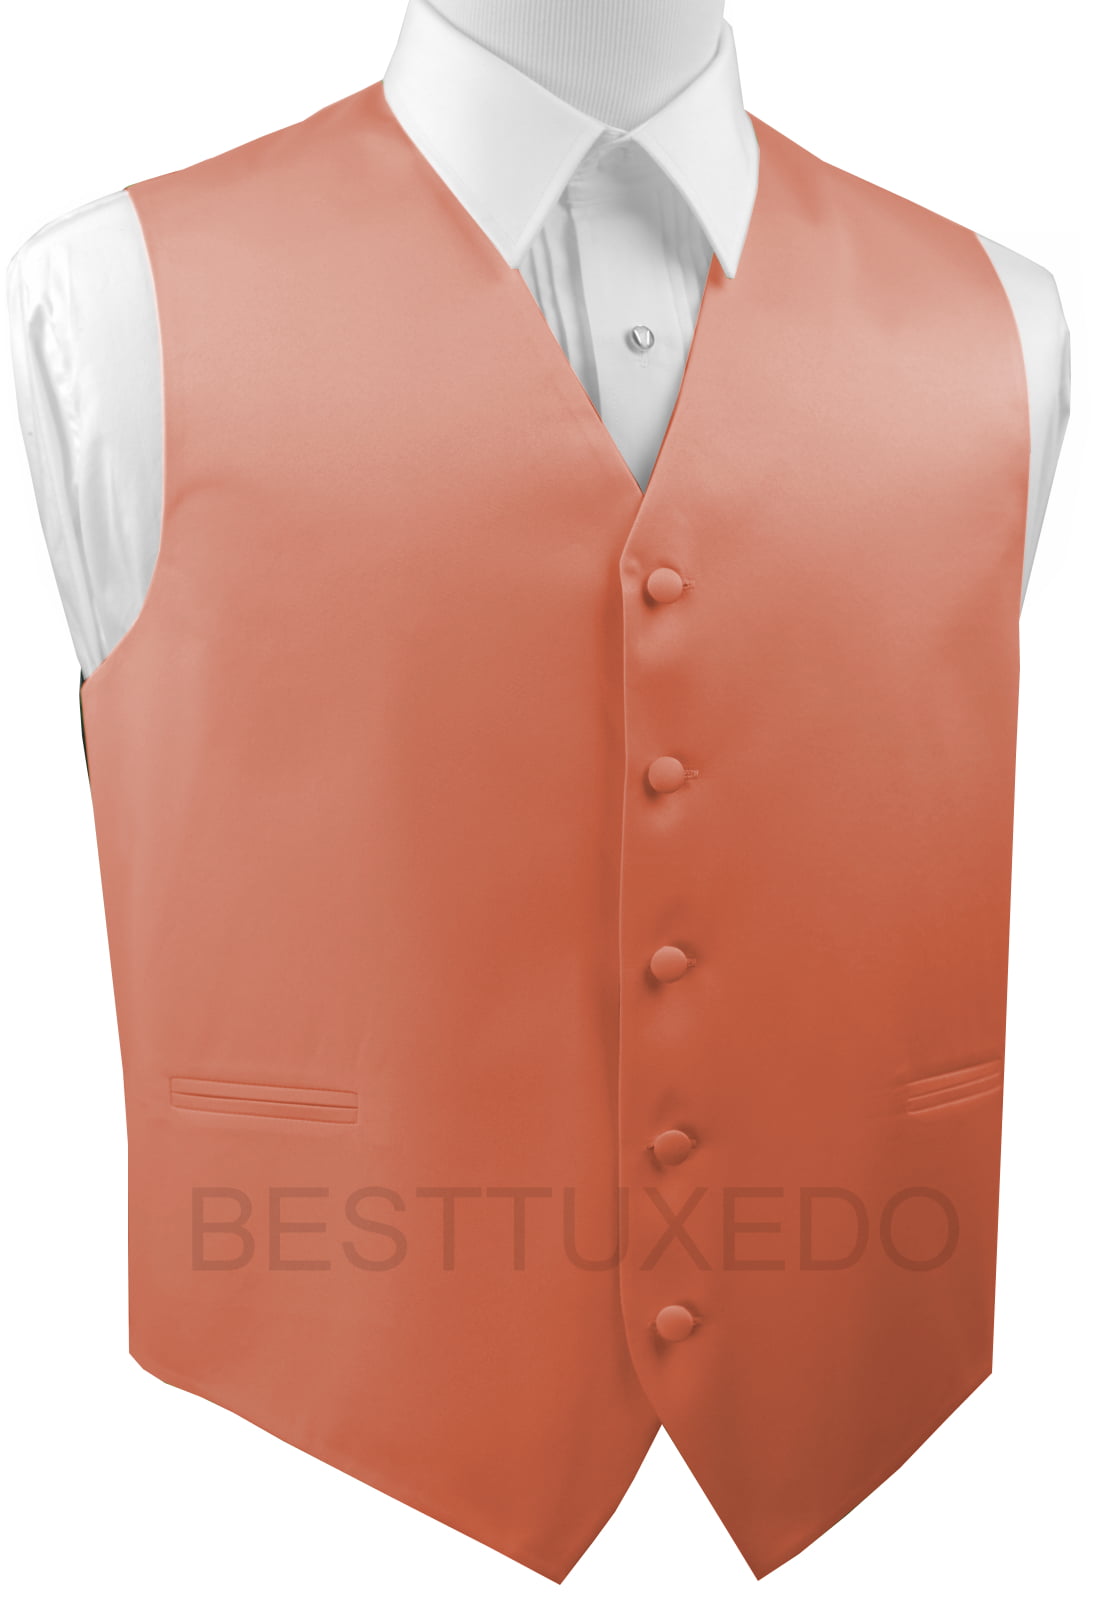 New Men's Formal Tuxedo Vest Waistcoat_Necktie Coral wedding party prom 